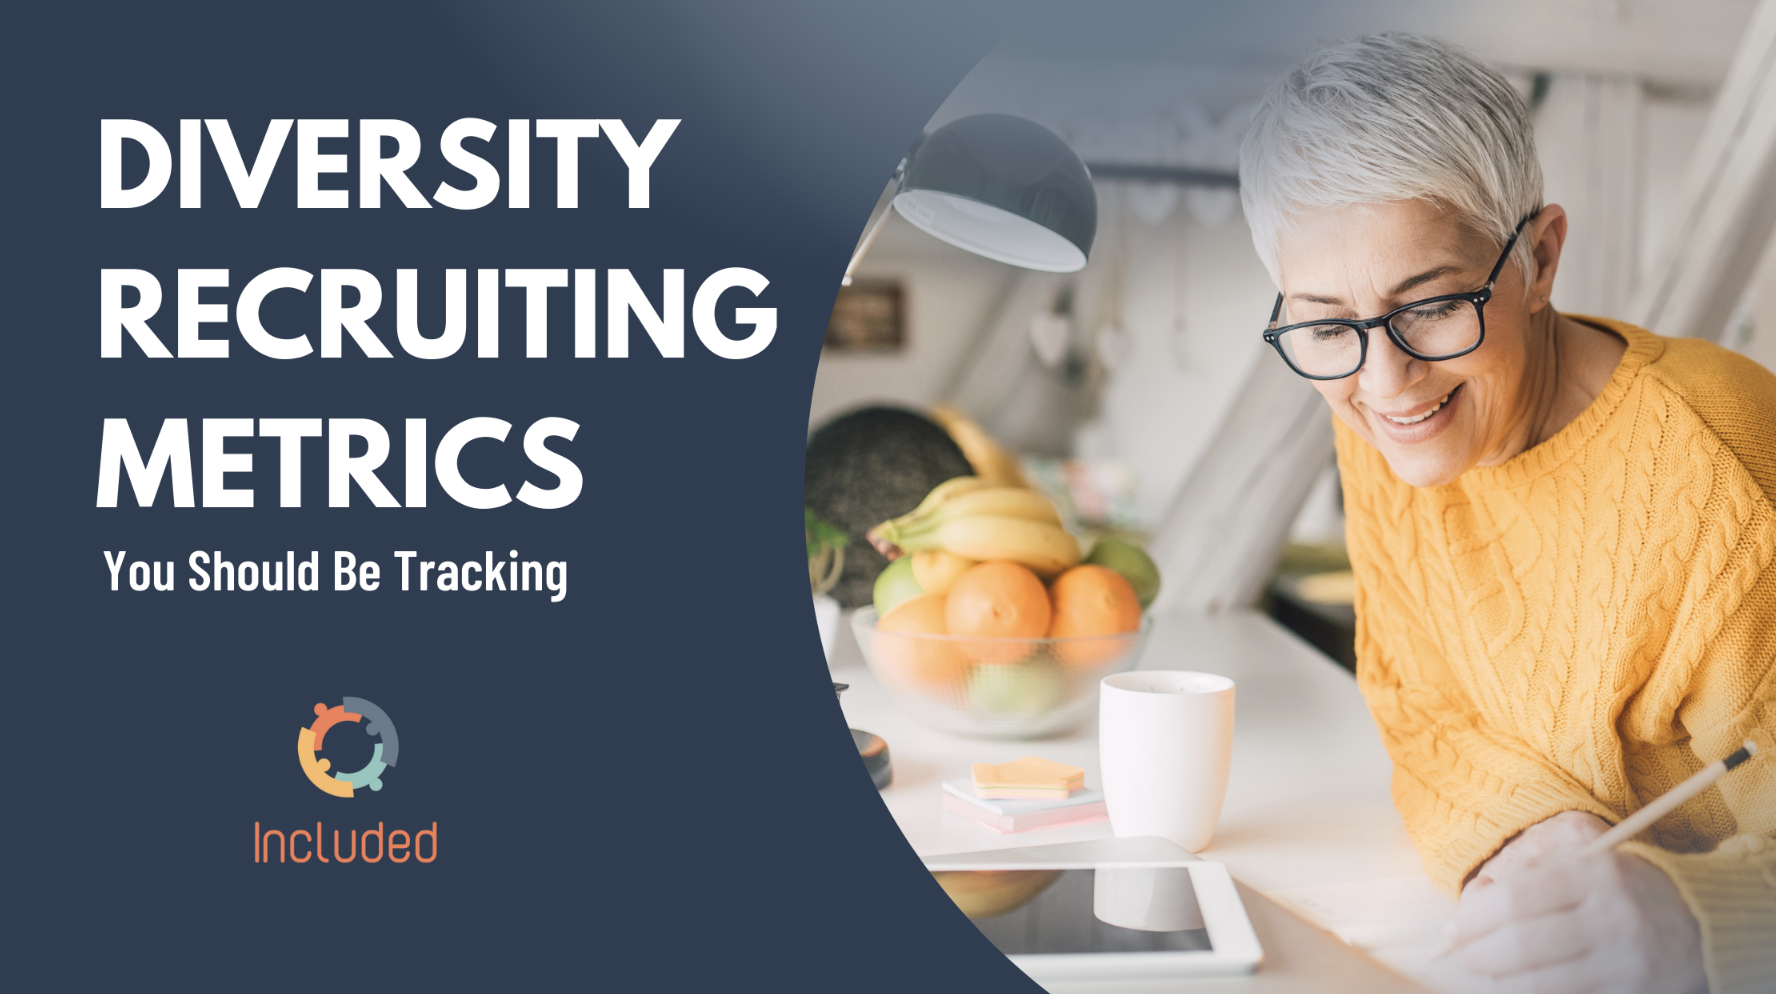 Diversity Recruiting Metrics You Should Be Tracking